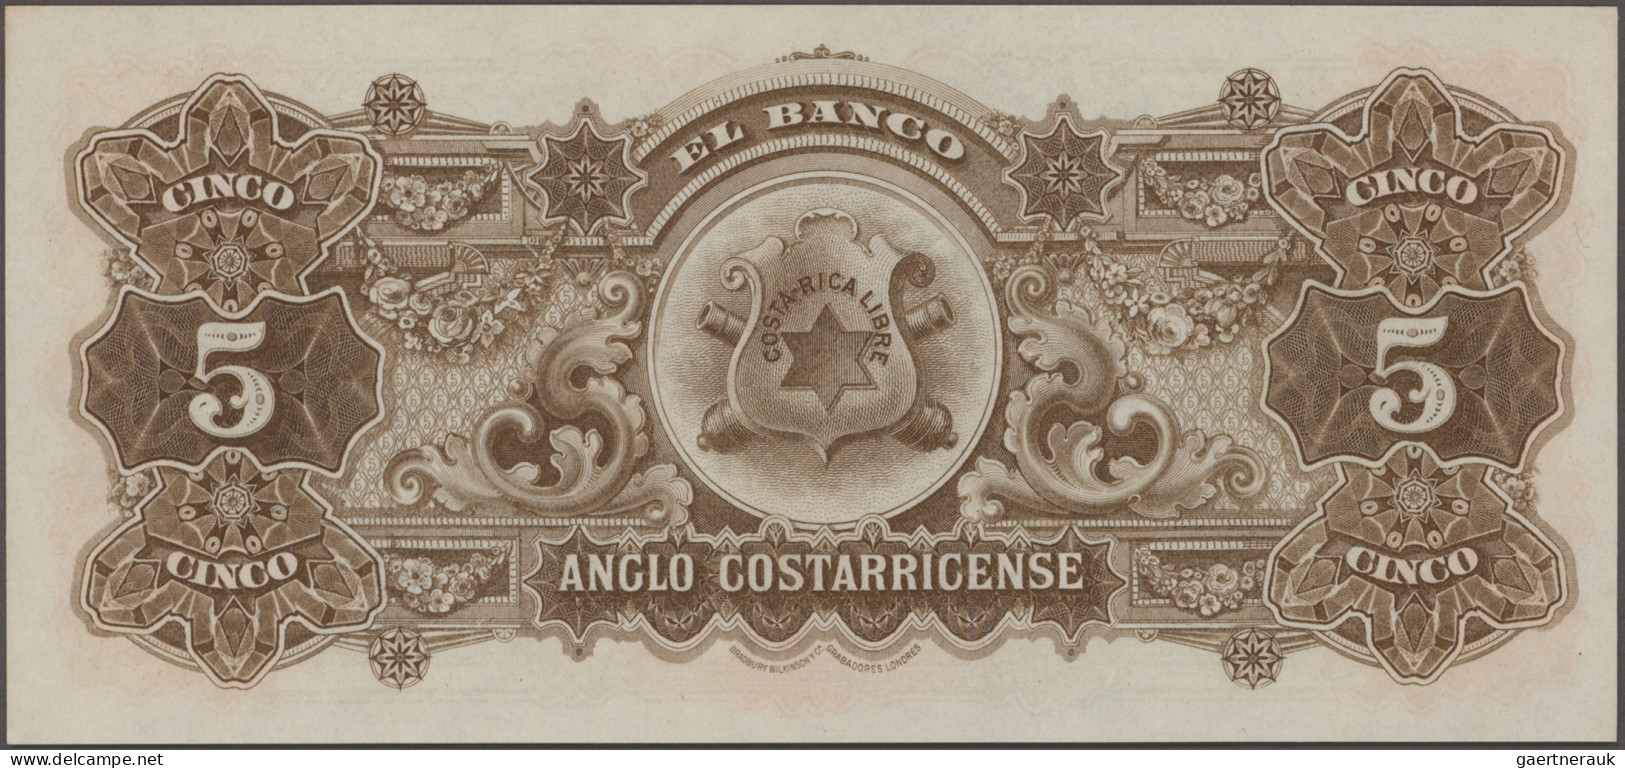 Costa Rica: Banco Central de Costa Rica and Banco Anglo-Costarricense, lot with